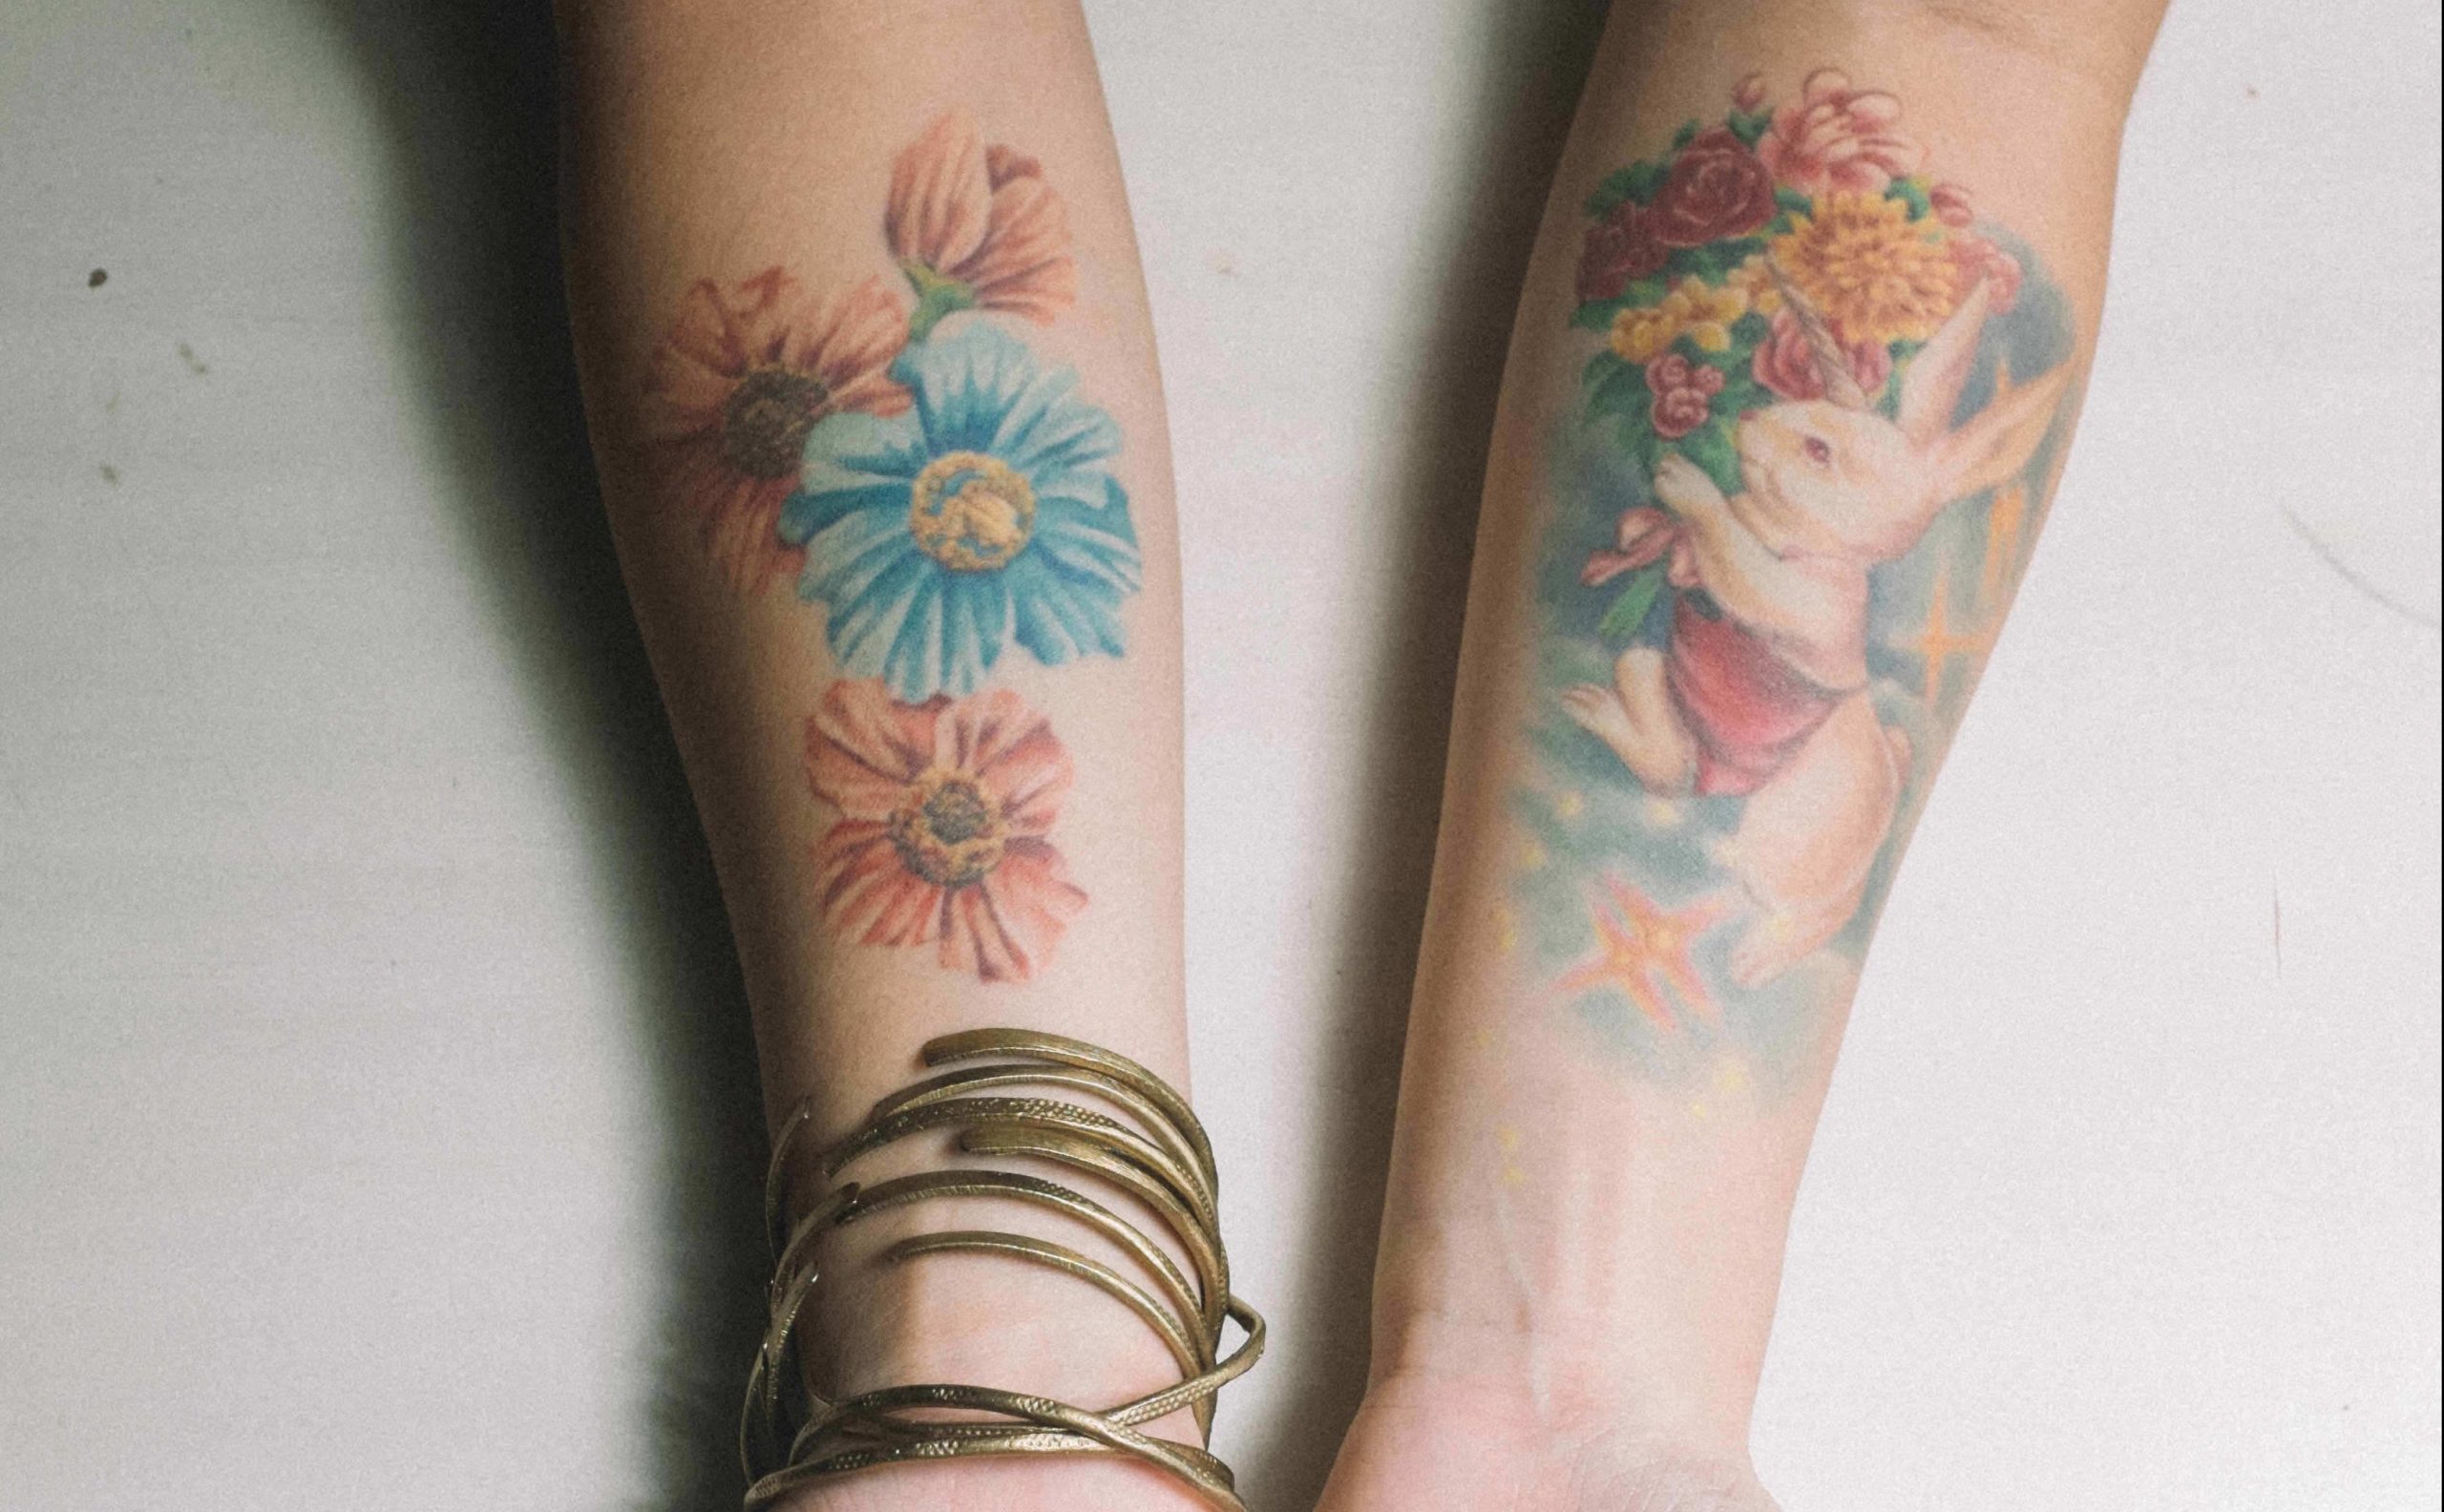 Fact Check: Do Tattoos Hurt More If You're Slim?